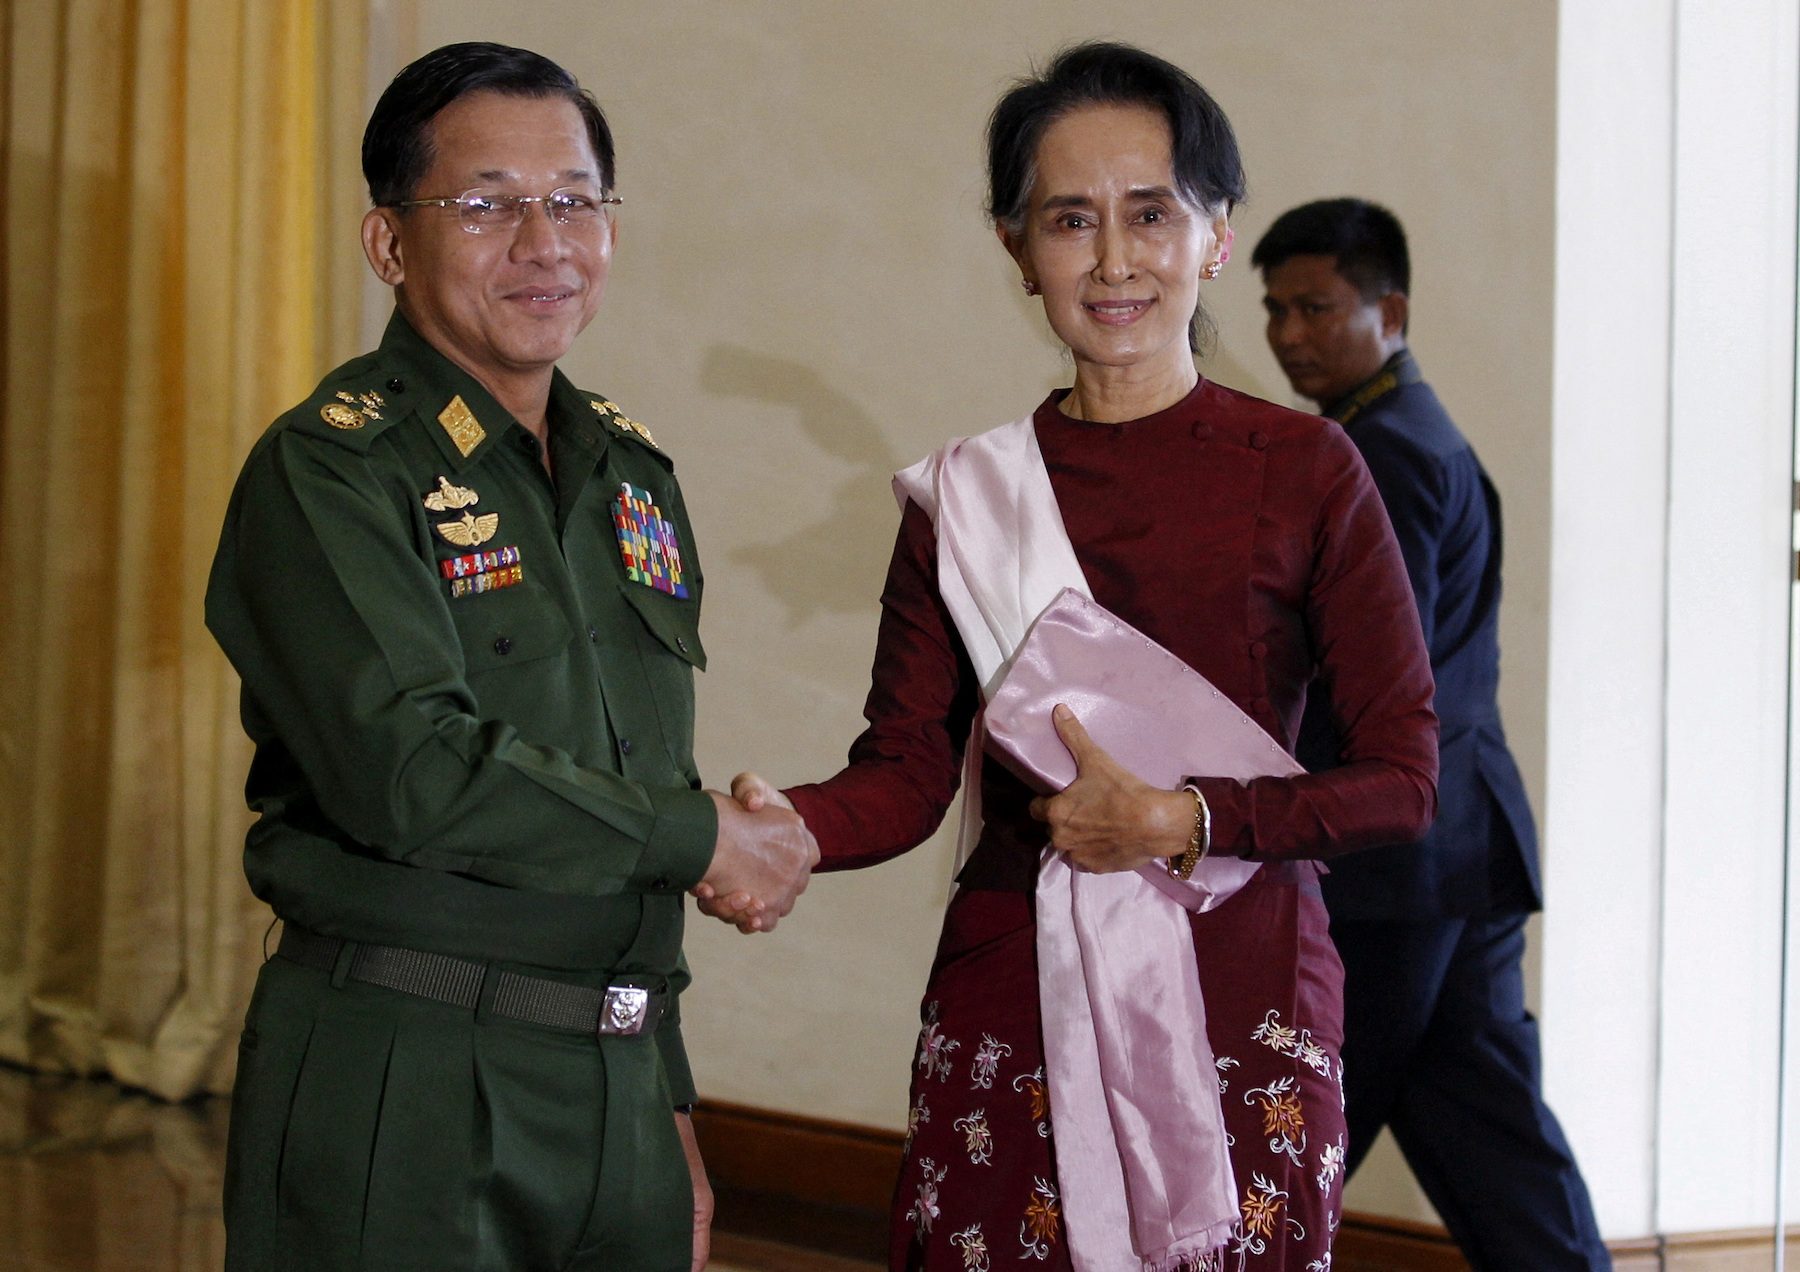 Australian held in Myanmar pleads not guilty in closed court